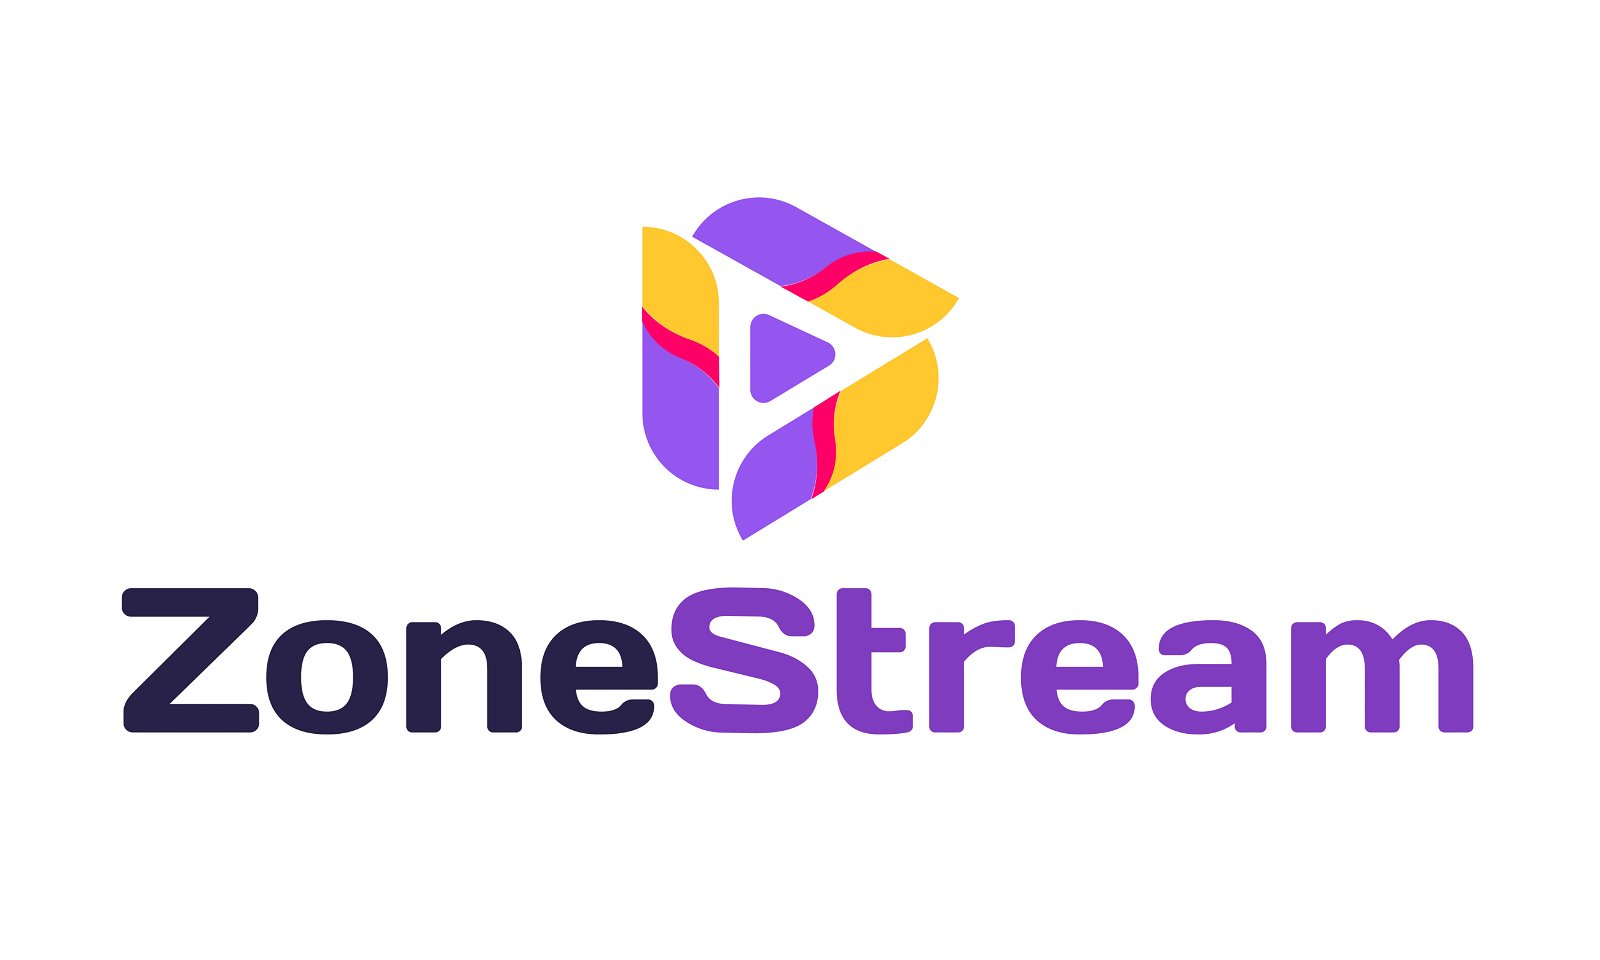 ZoneStream.com - Creative brandable domain for sale